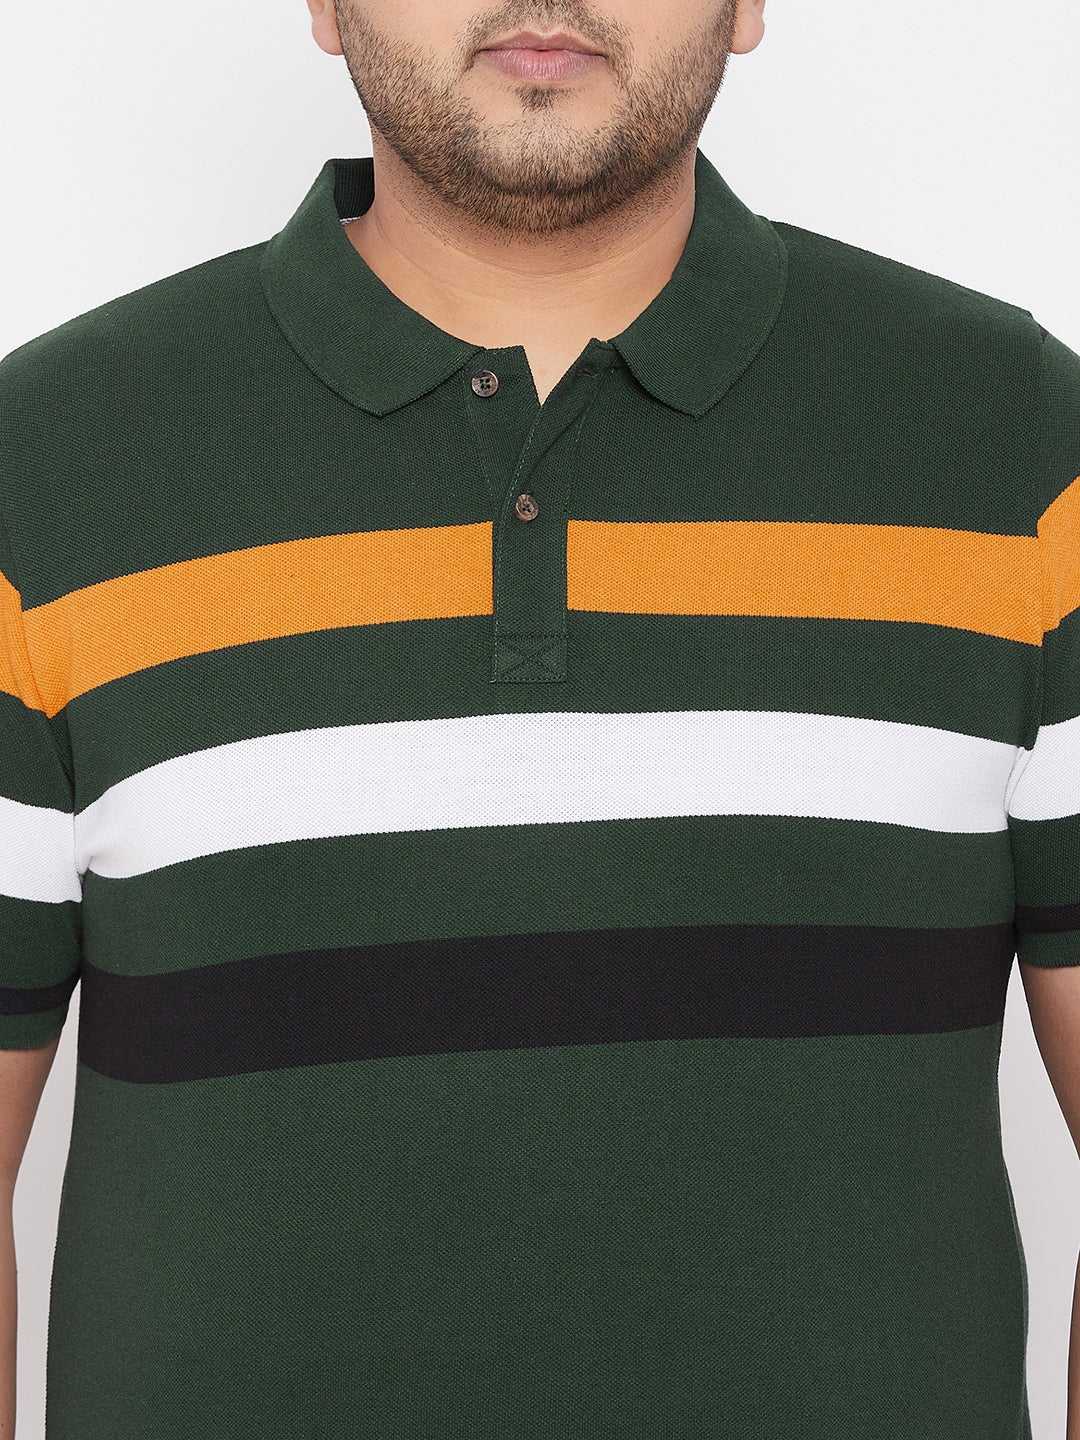 Austivo Men's Half Sleeves Polo Neck  T-shirt